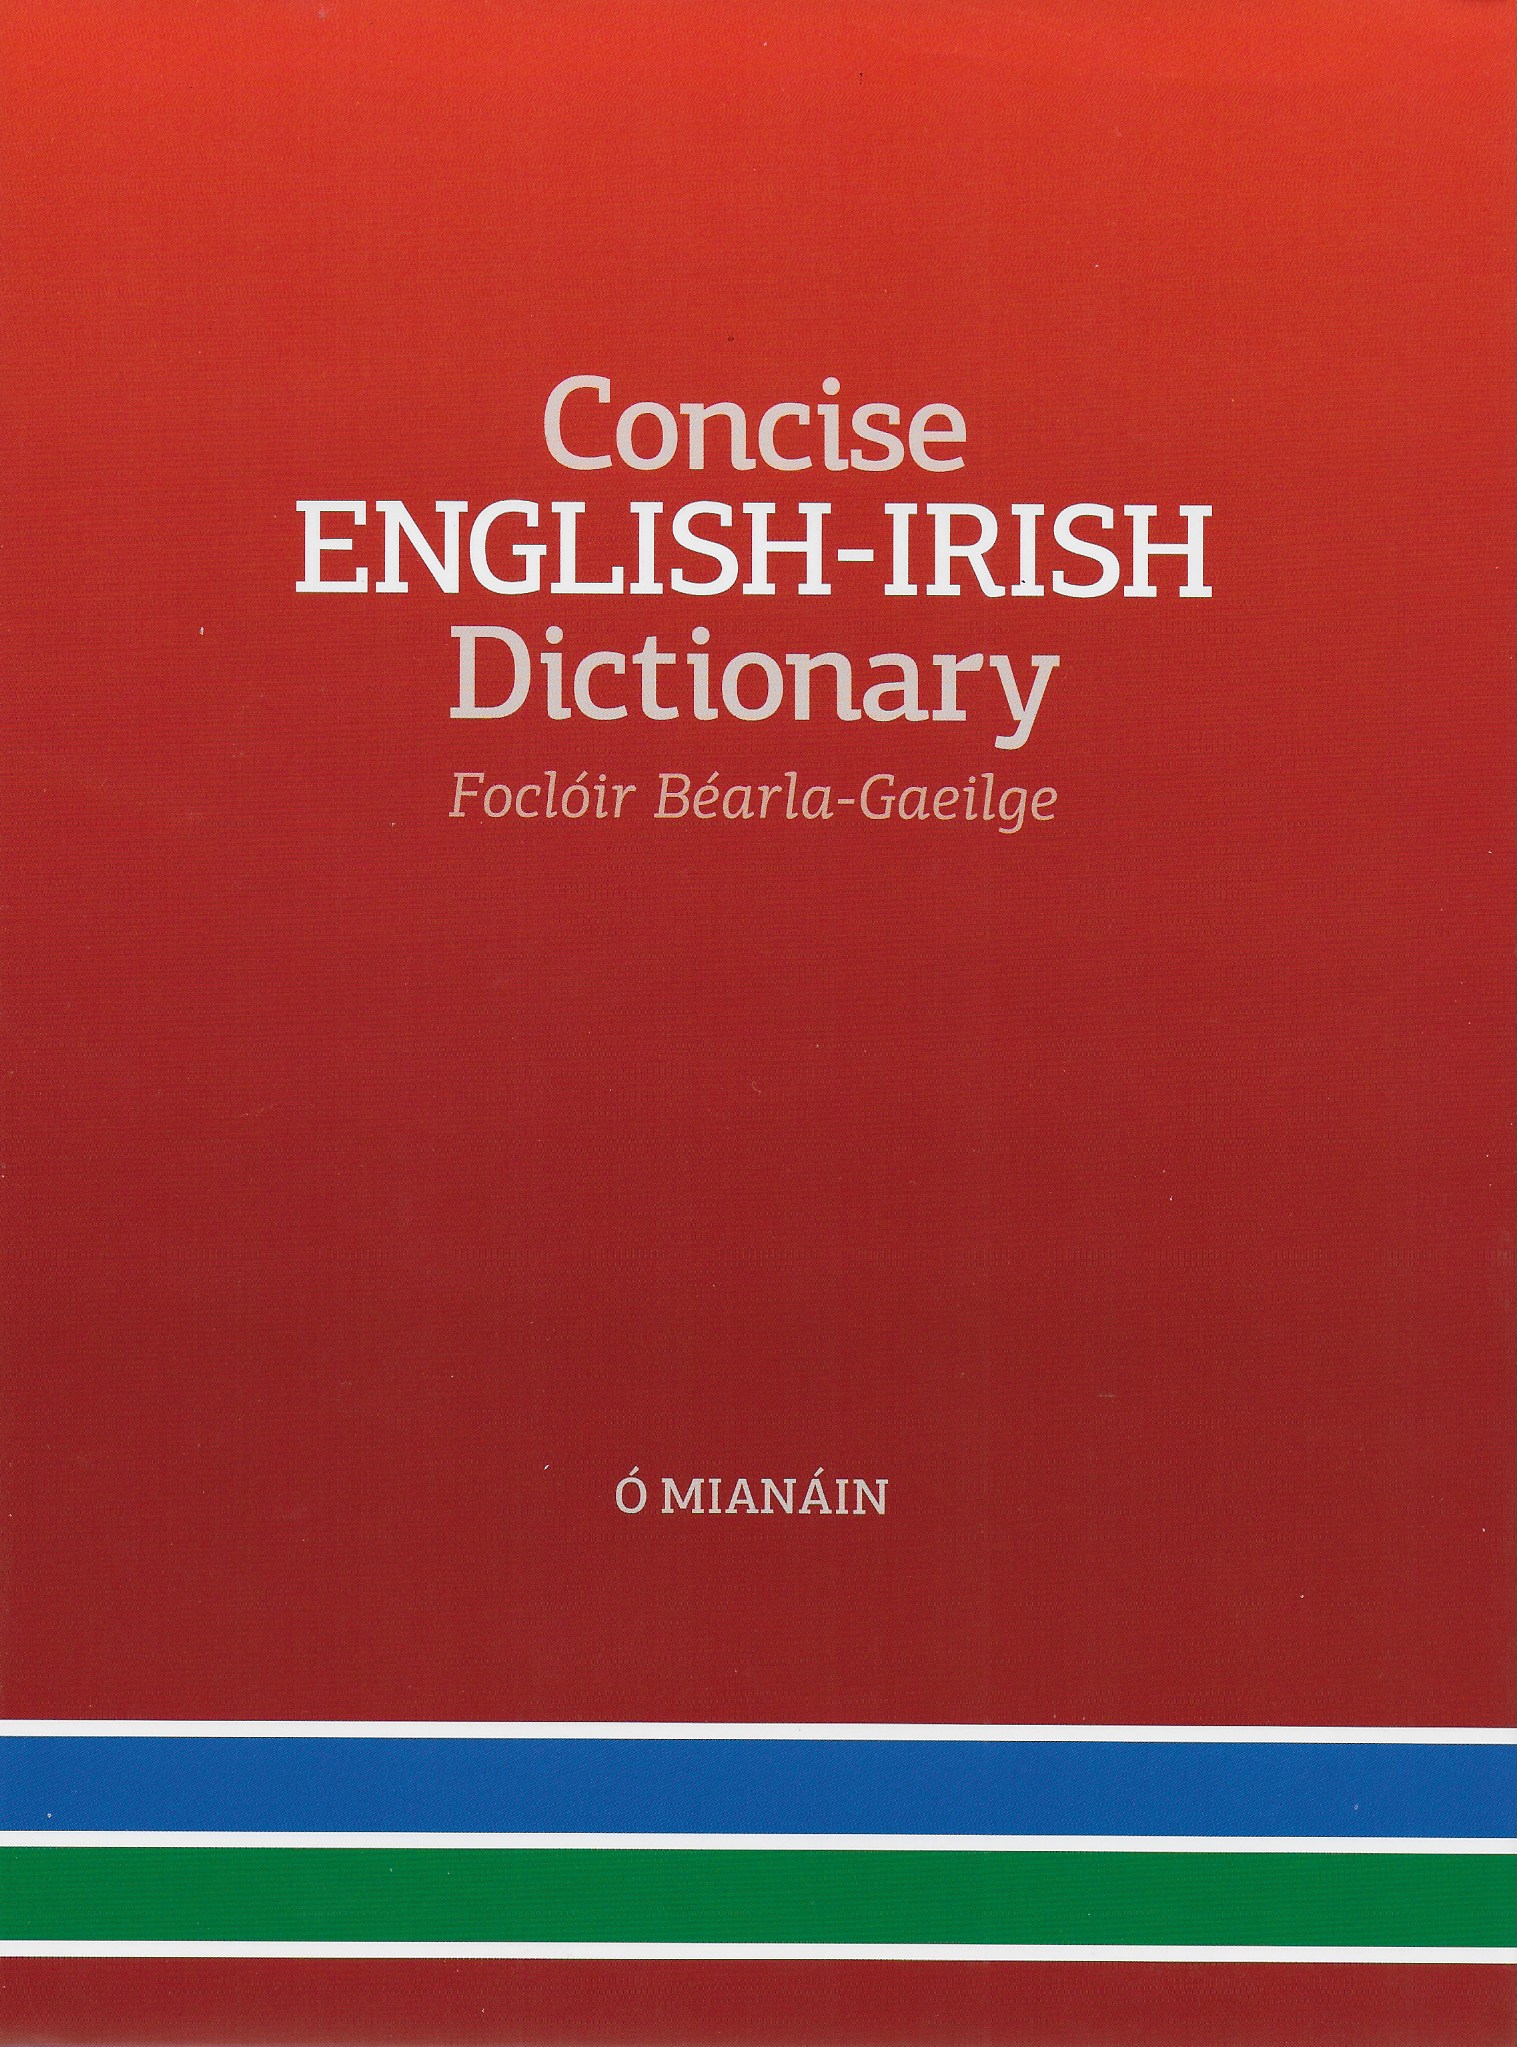 Concise English-Irish Dictionary (Foclóir Béarla-Gaeilge)